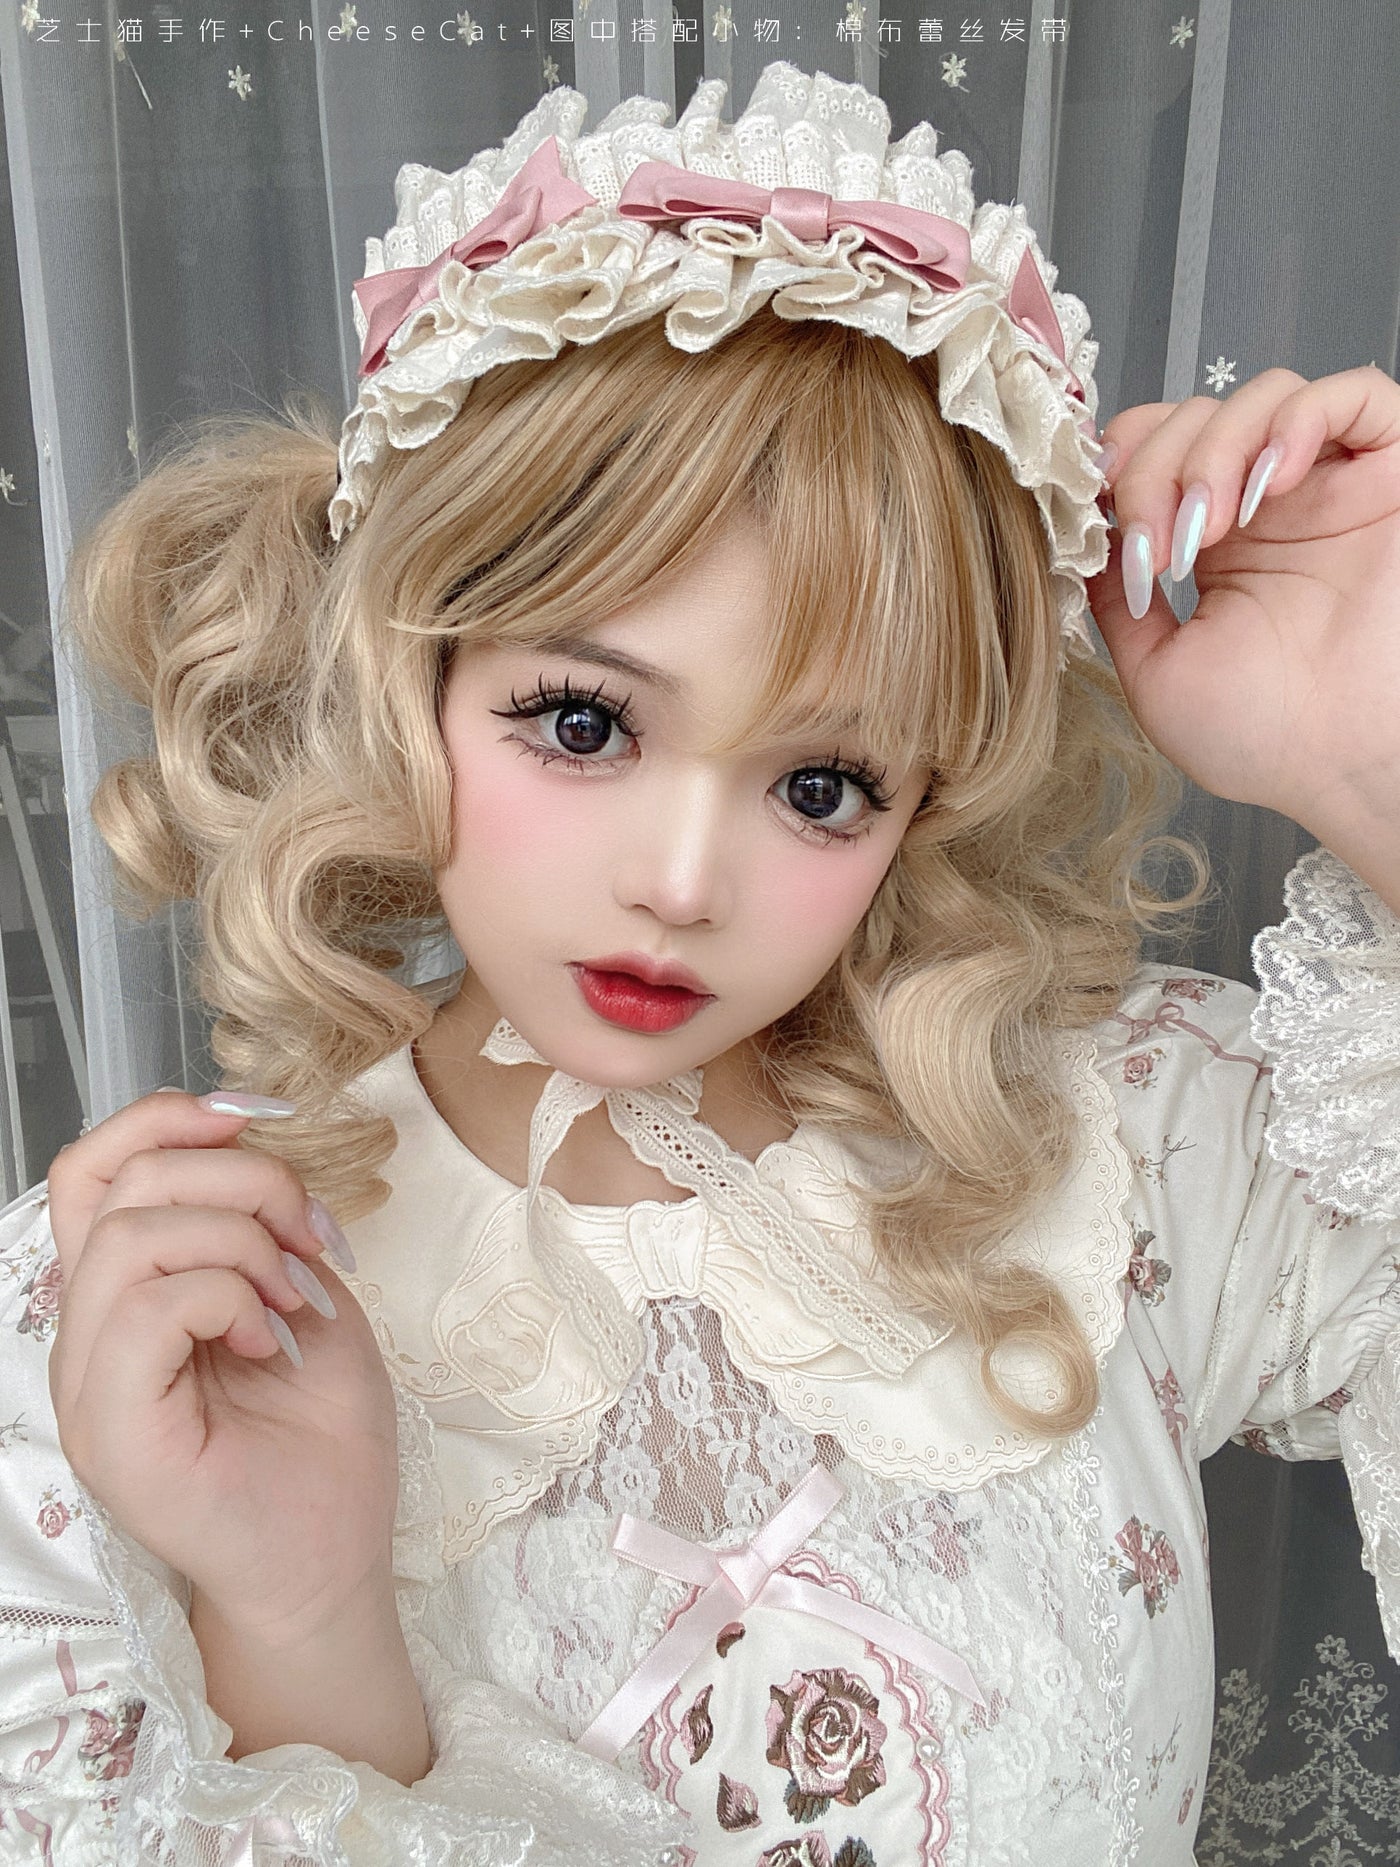 (Buyforme) CheeseCat~Doll Lullaby Tabby Cat Cotton Lolita Headdress   